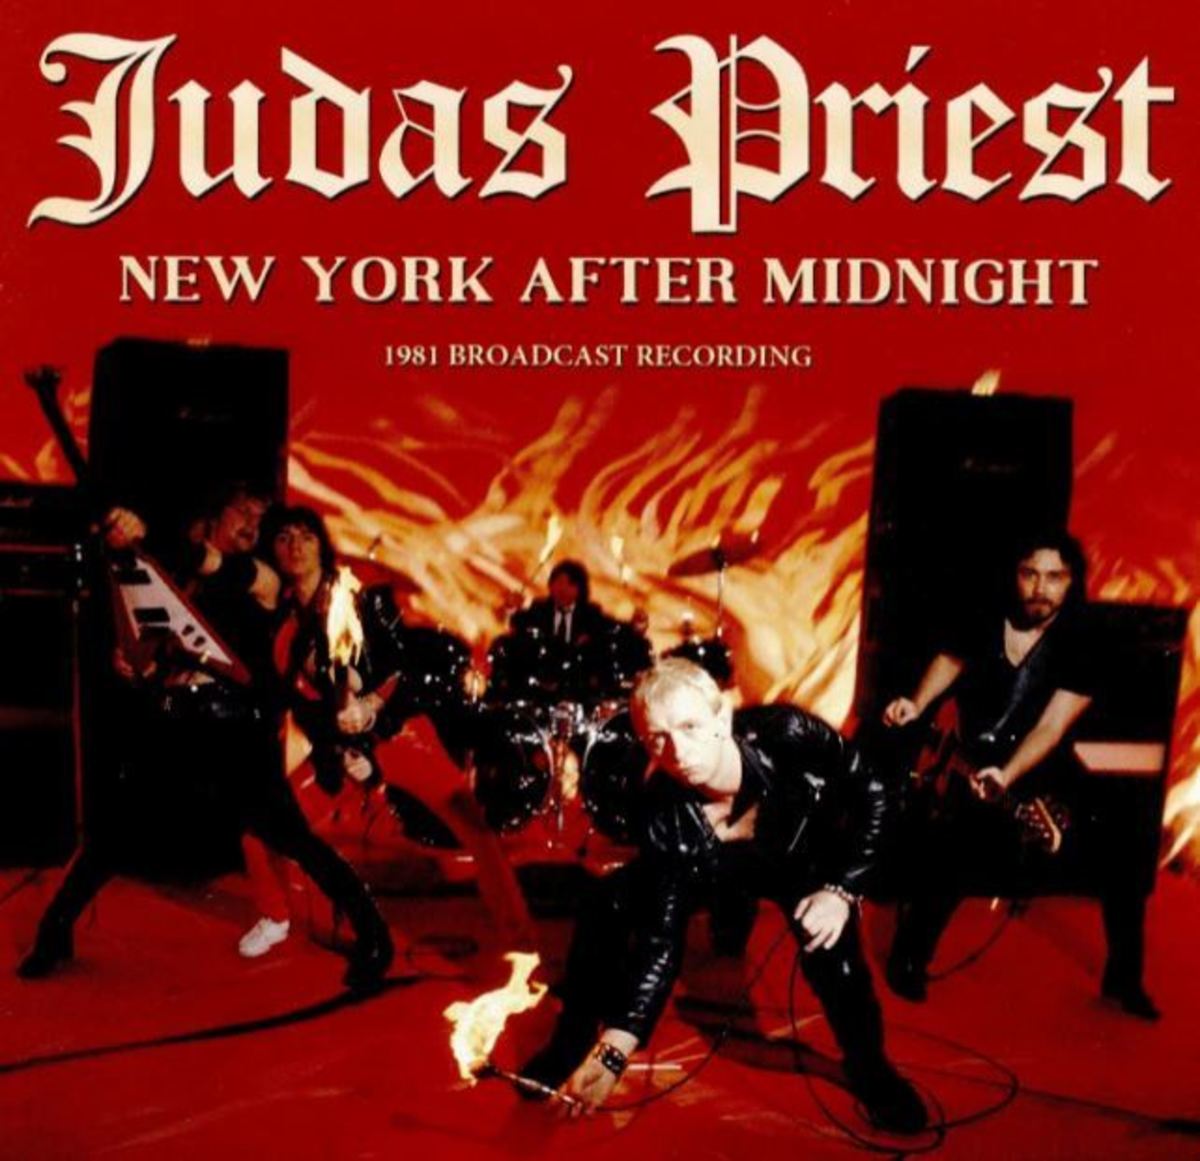 Judas Priest, New York After Midnight, 1981